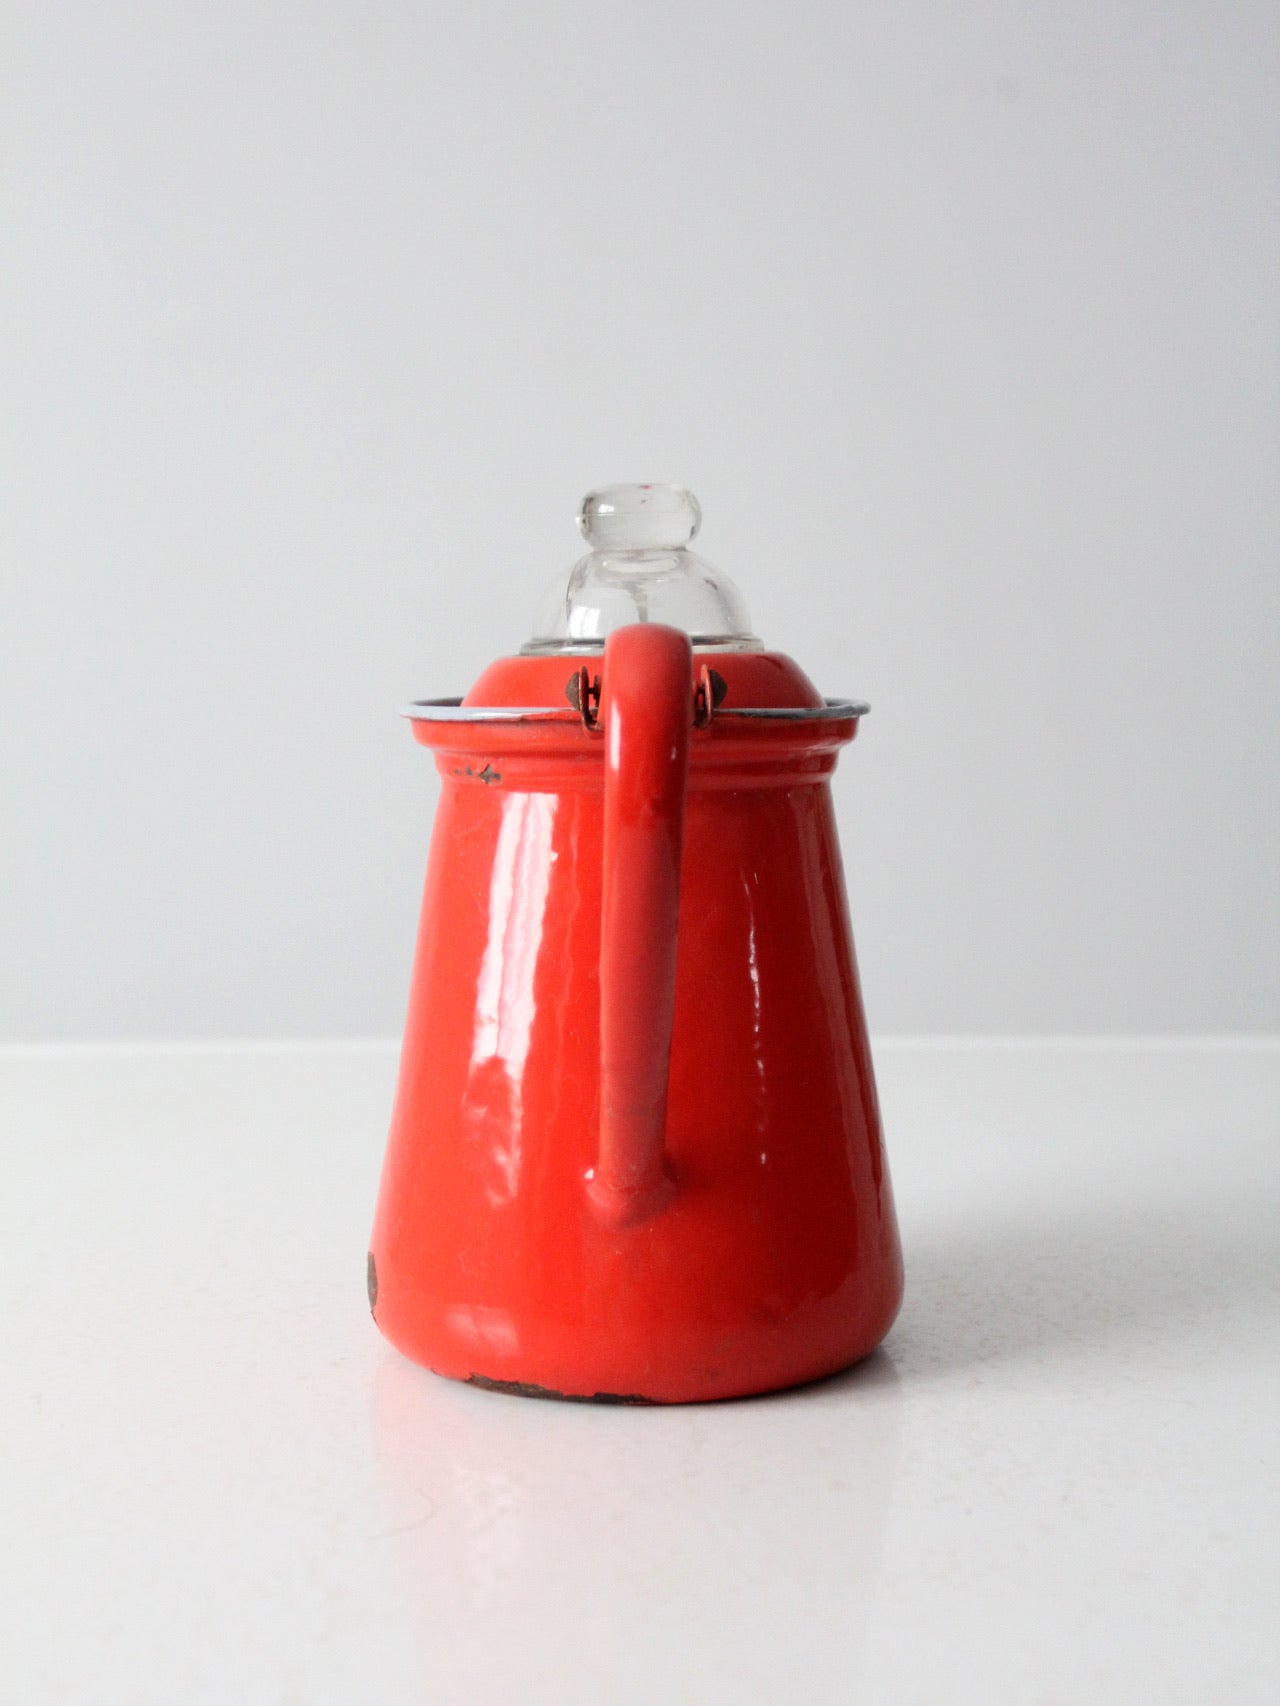 vintage Lampart red enamel coffee pot